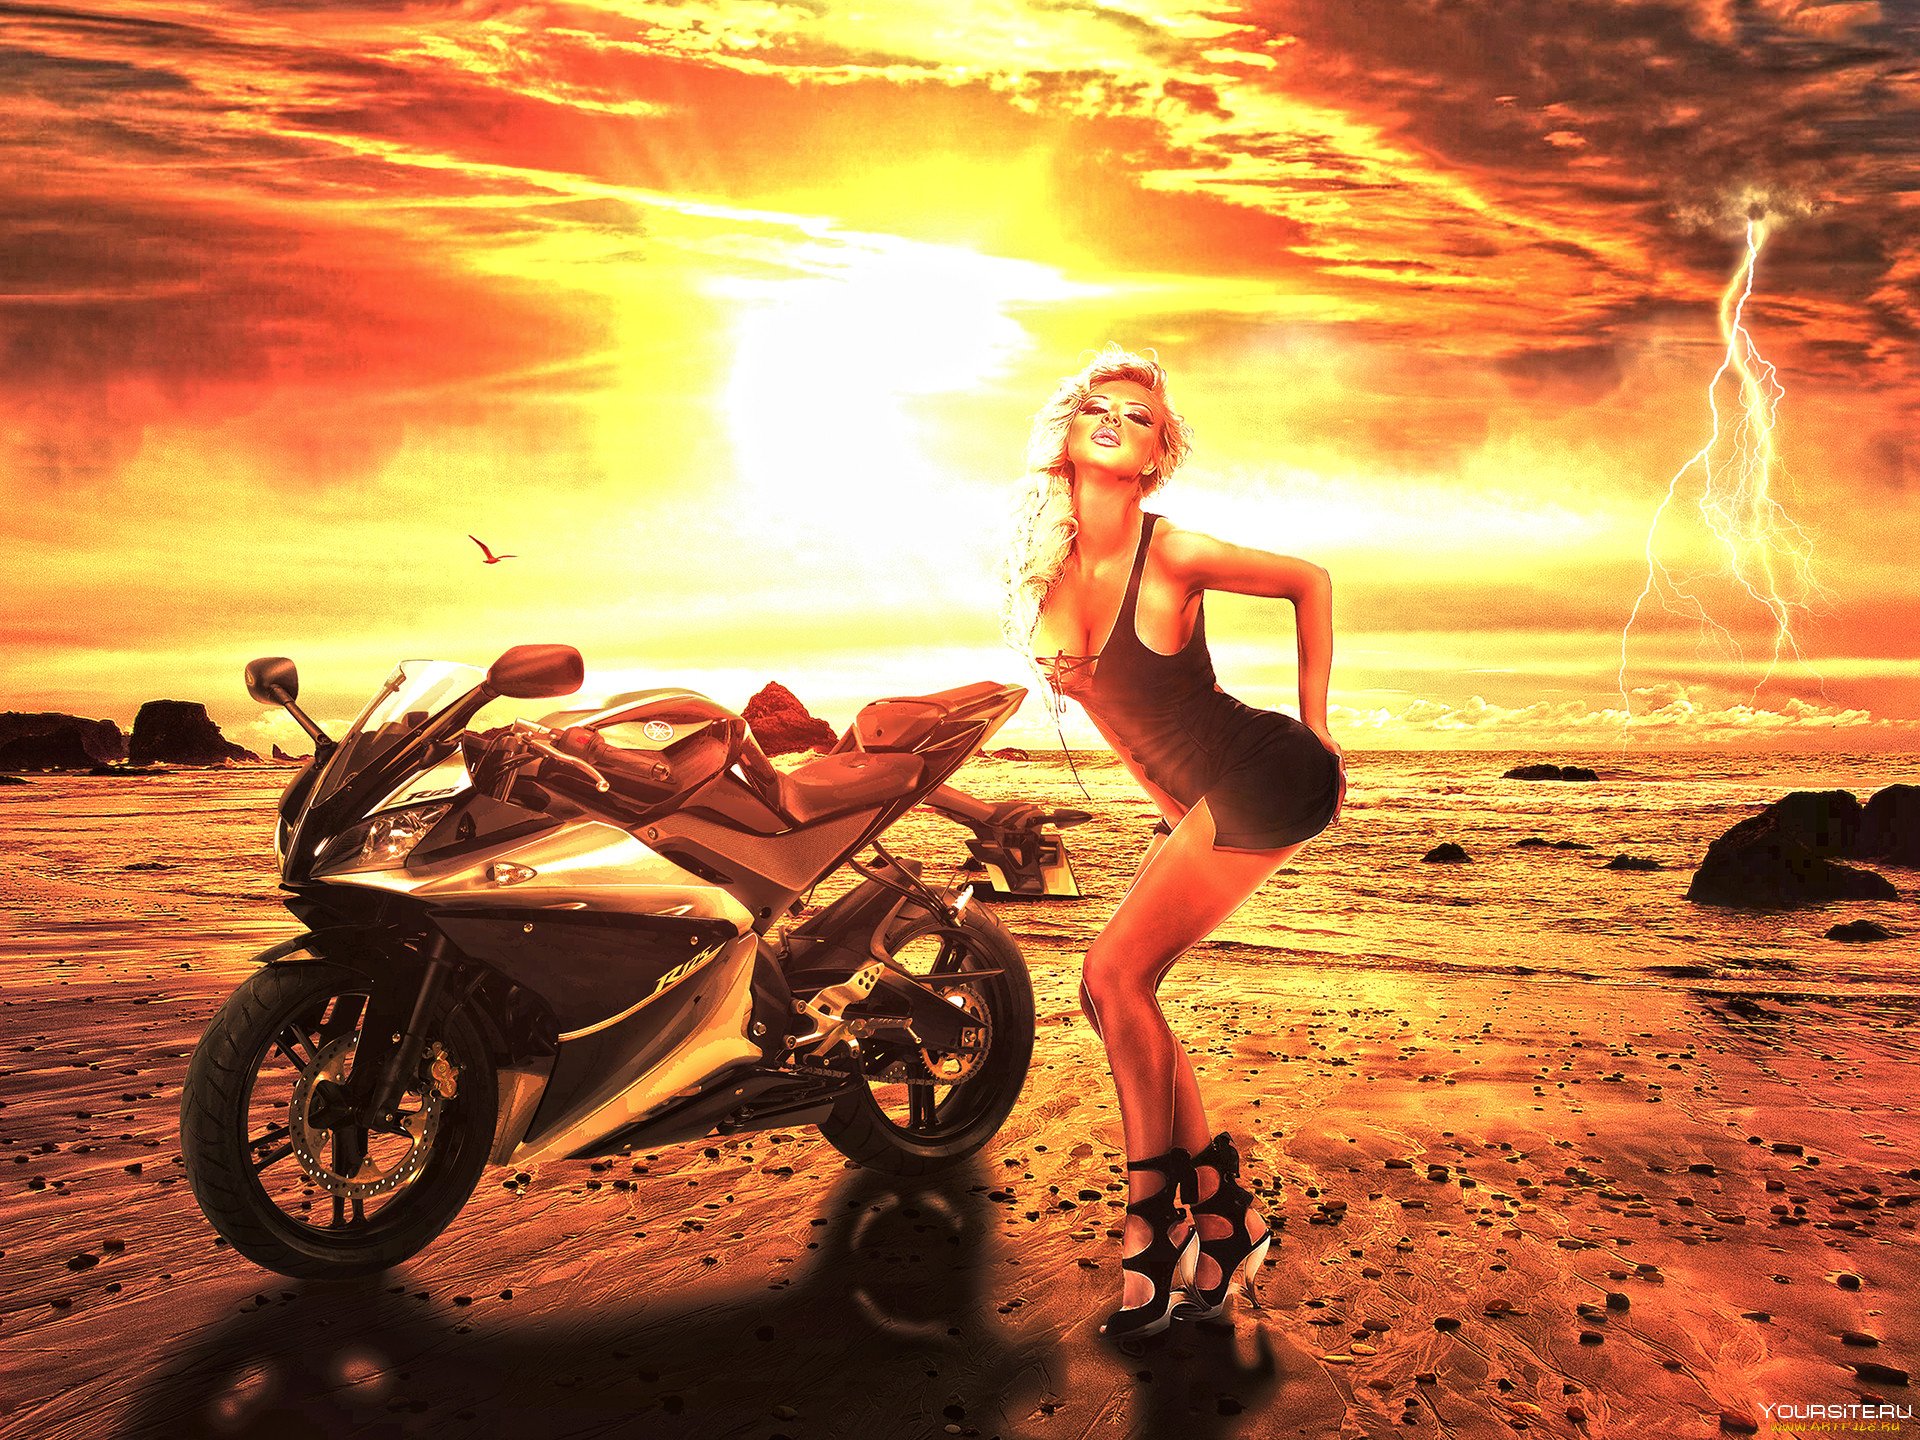 Девушки машины мотоциклы. Девушка на мотоцикле. Красивые девушки на мотоциклах. Девушка на байке. Красивые девушки на фоне мотоцикла.